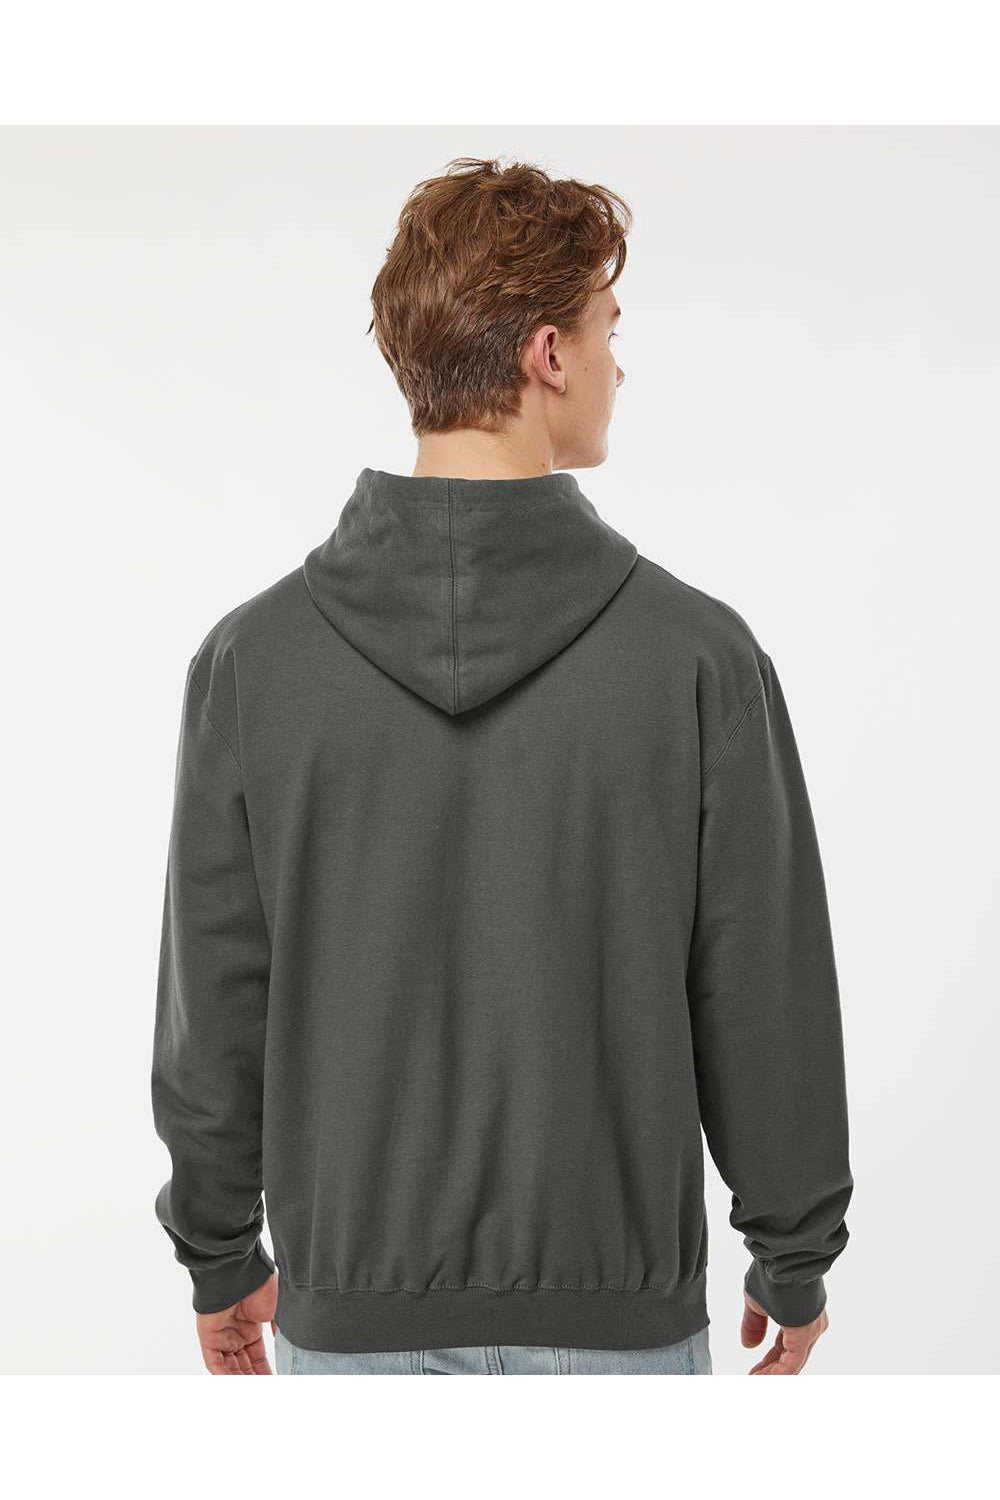 Tultex 320 Mens Fleece Hooded Sweatshirt Hoodie Charcoal Grey Model Back